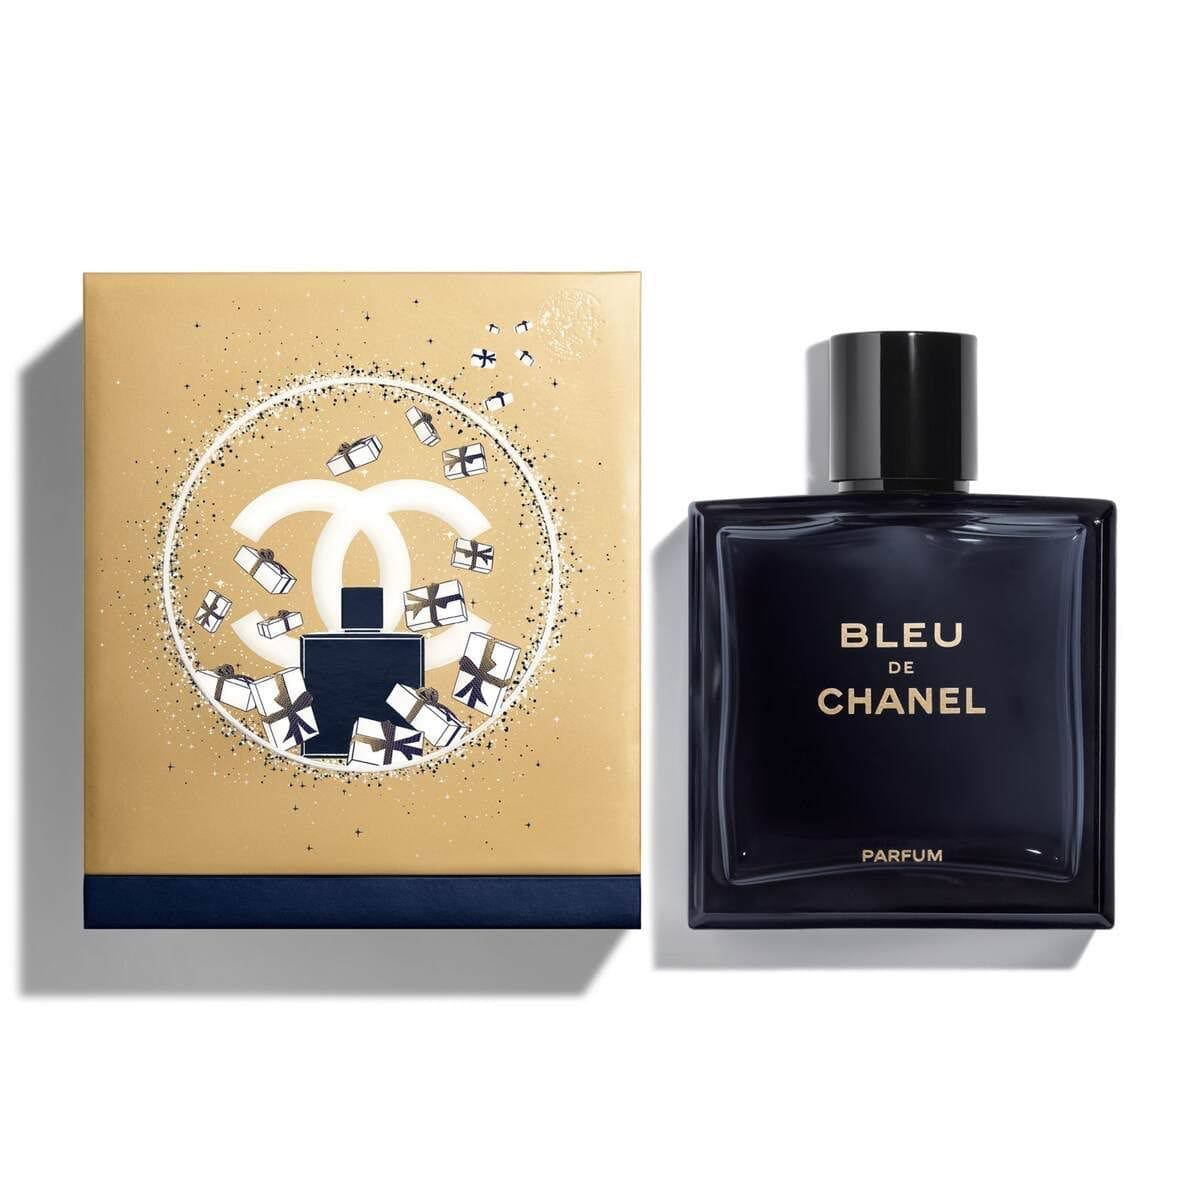 3715 Bleu de Chanel Parfum Chanel PERFUME 100ml WITH BAG